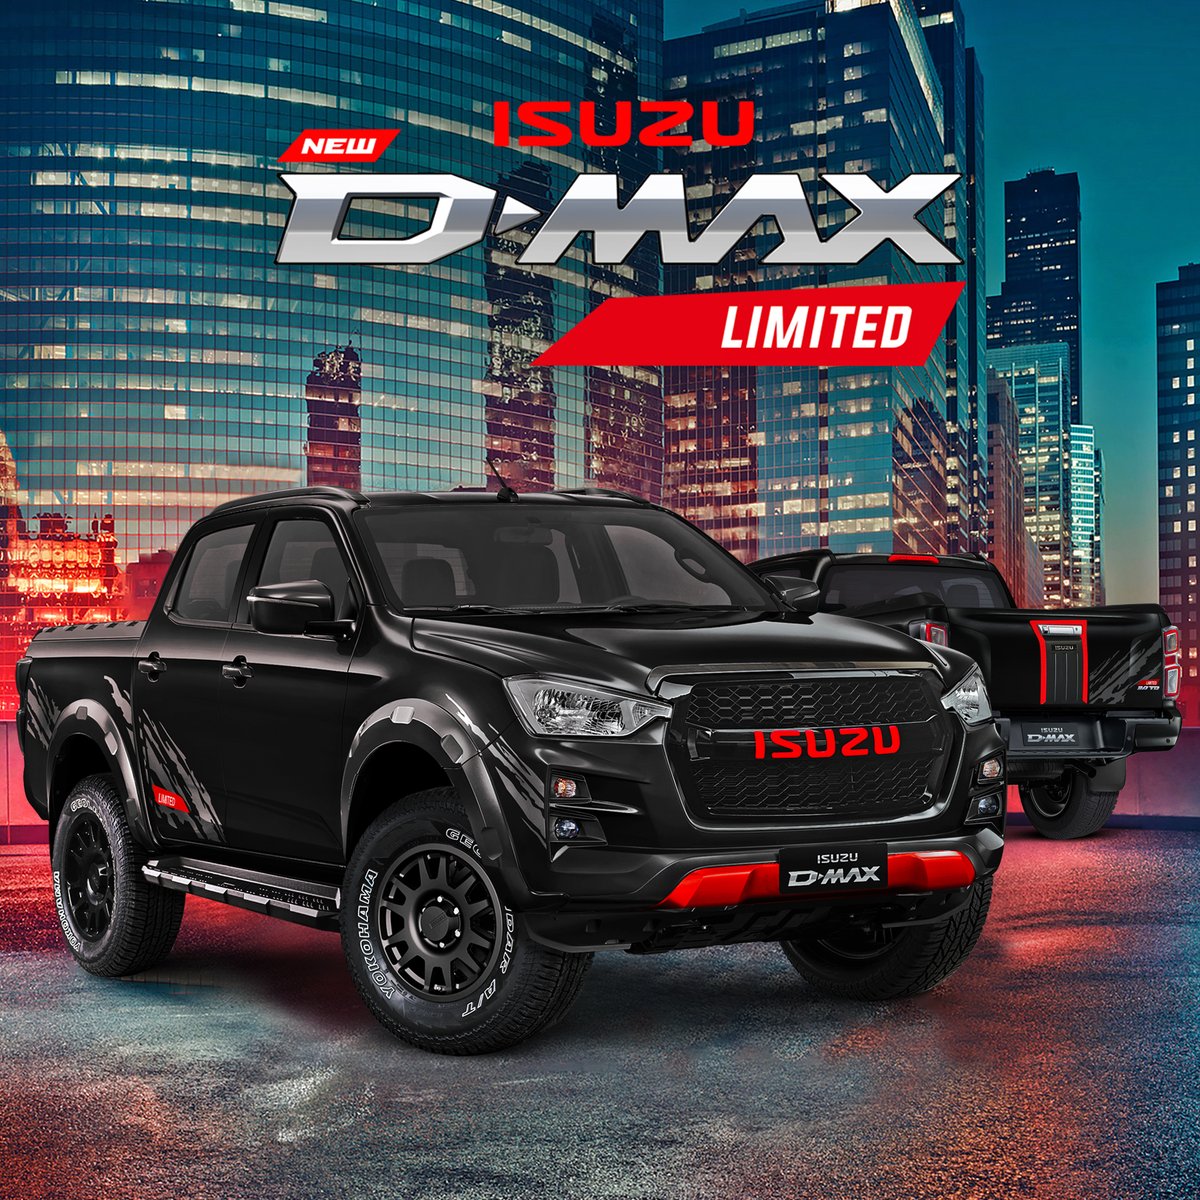 Unleash Your Drive with the New Isuzu D-MAX Limited. Inquire at an Isuzu dealer today! #IsuzuDMAX #UnleashYourDrive